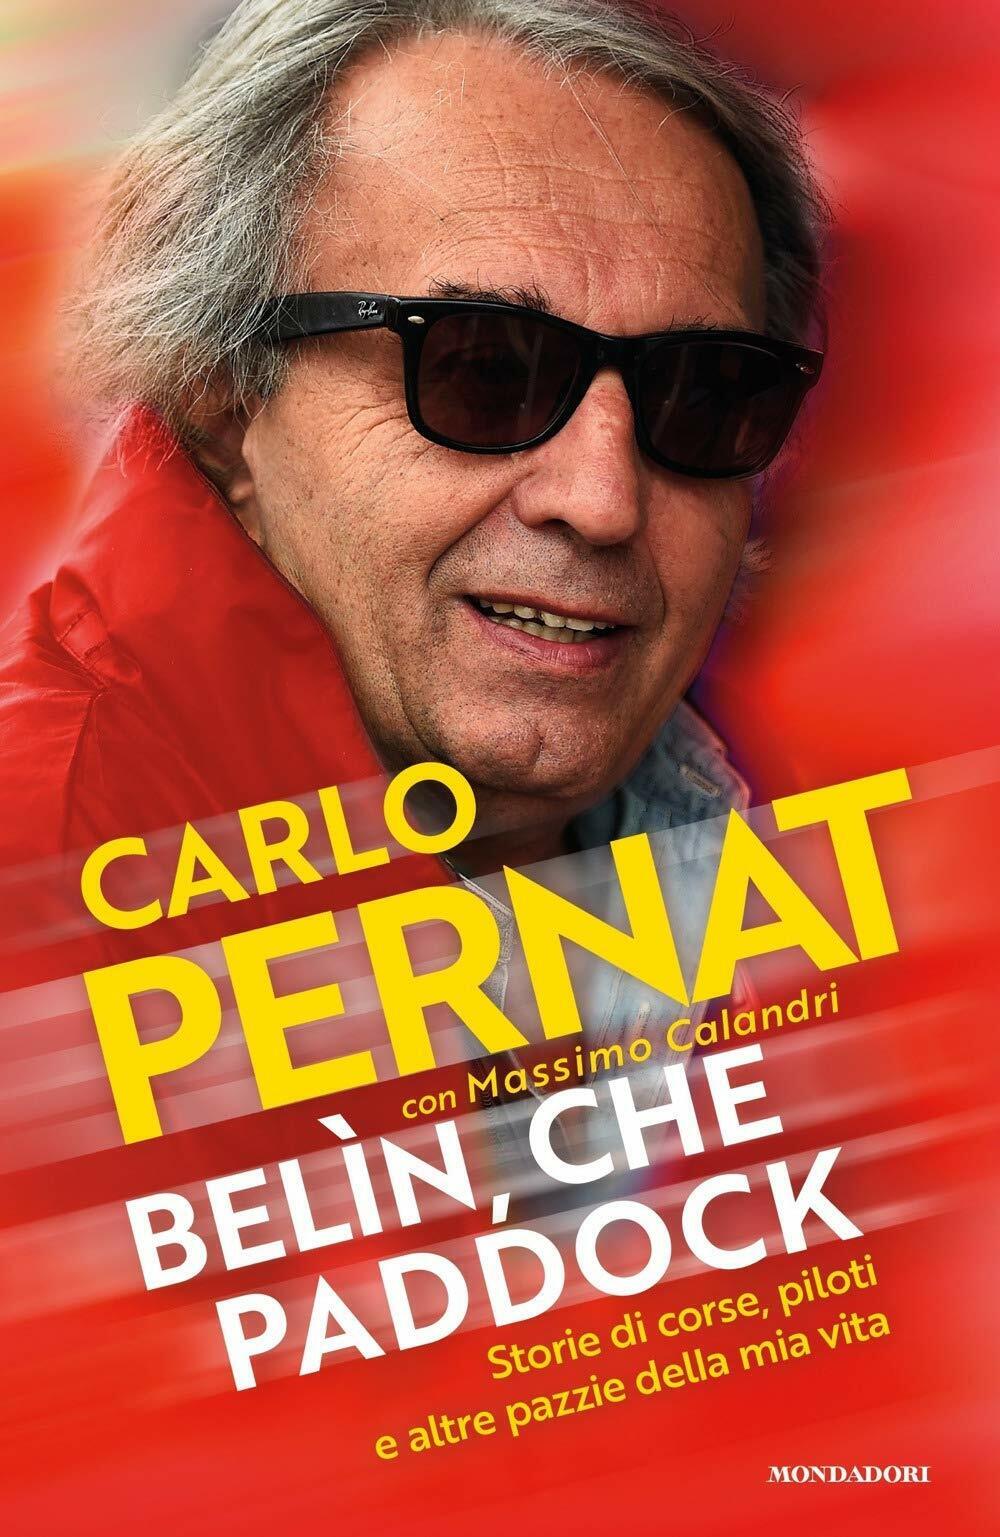 Bel?n, che paddock - Carlo Pernat, Massimo Calandri - Mondadori, 2019